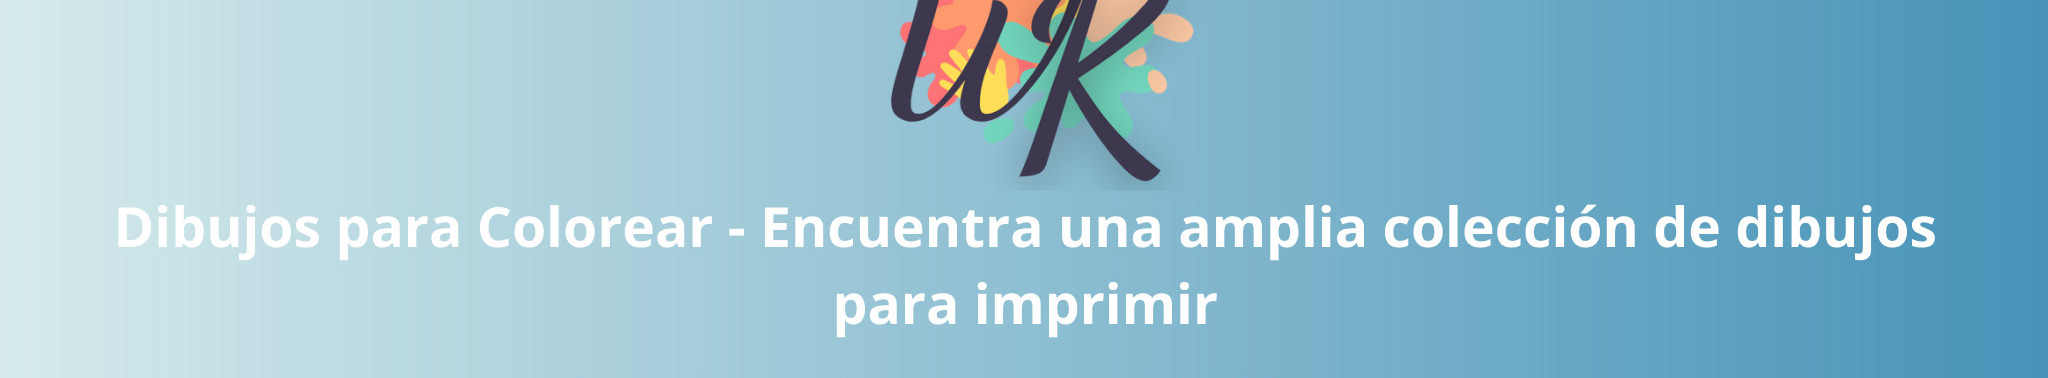 WK Dibujos Para Colorear's profile banner